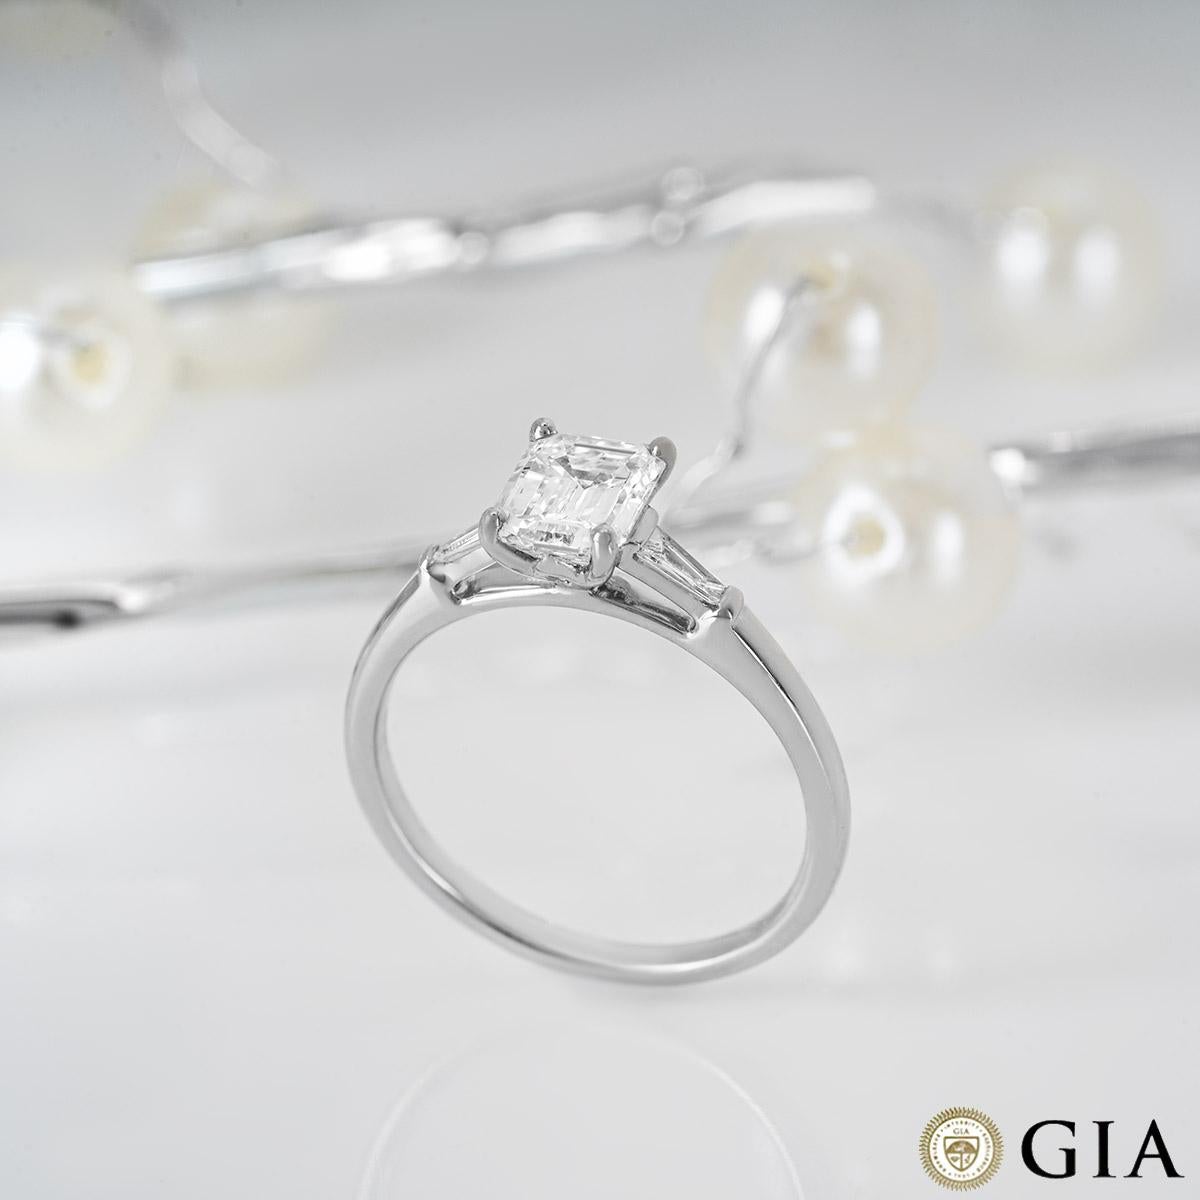 GIA Certified White Gold Emerald Cut Diamond Ring 1.01ct E/SI1 For Sale 4